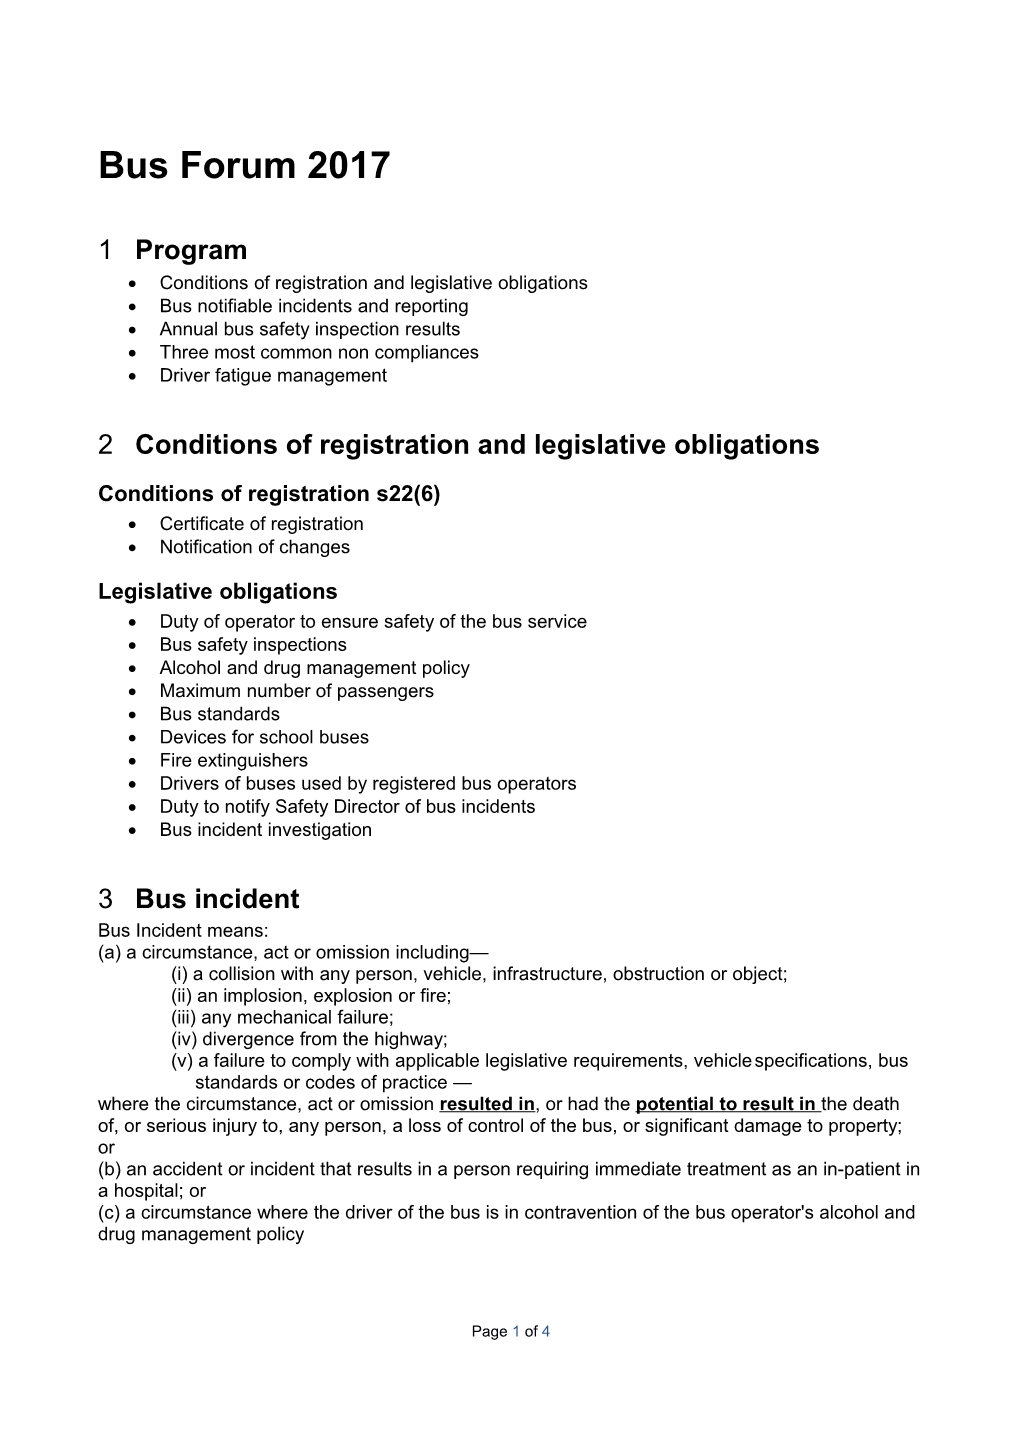 Conditions of Registration and Legislative Obligations